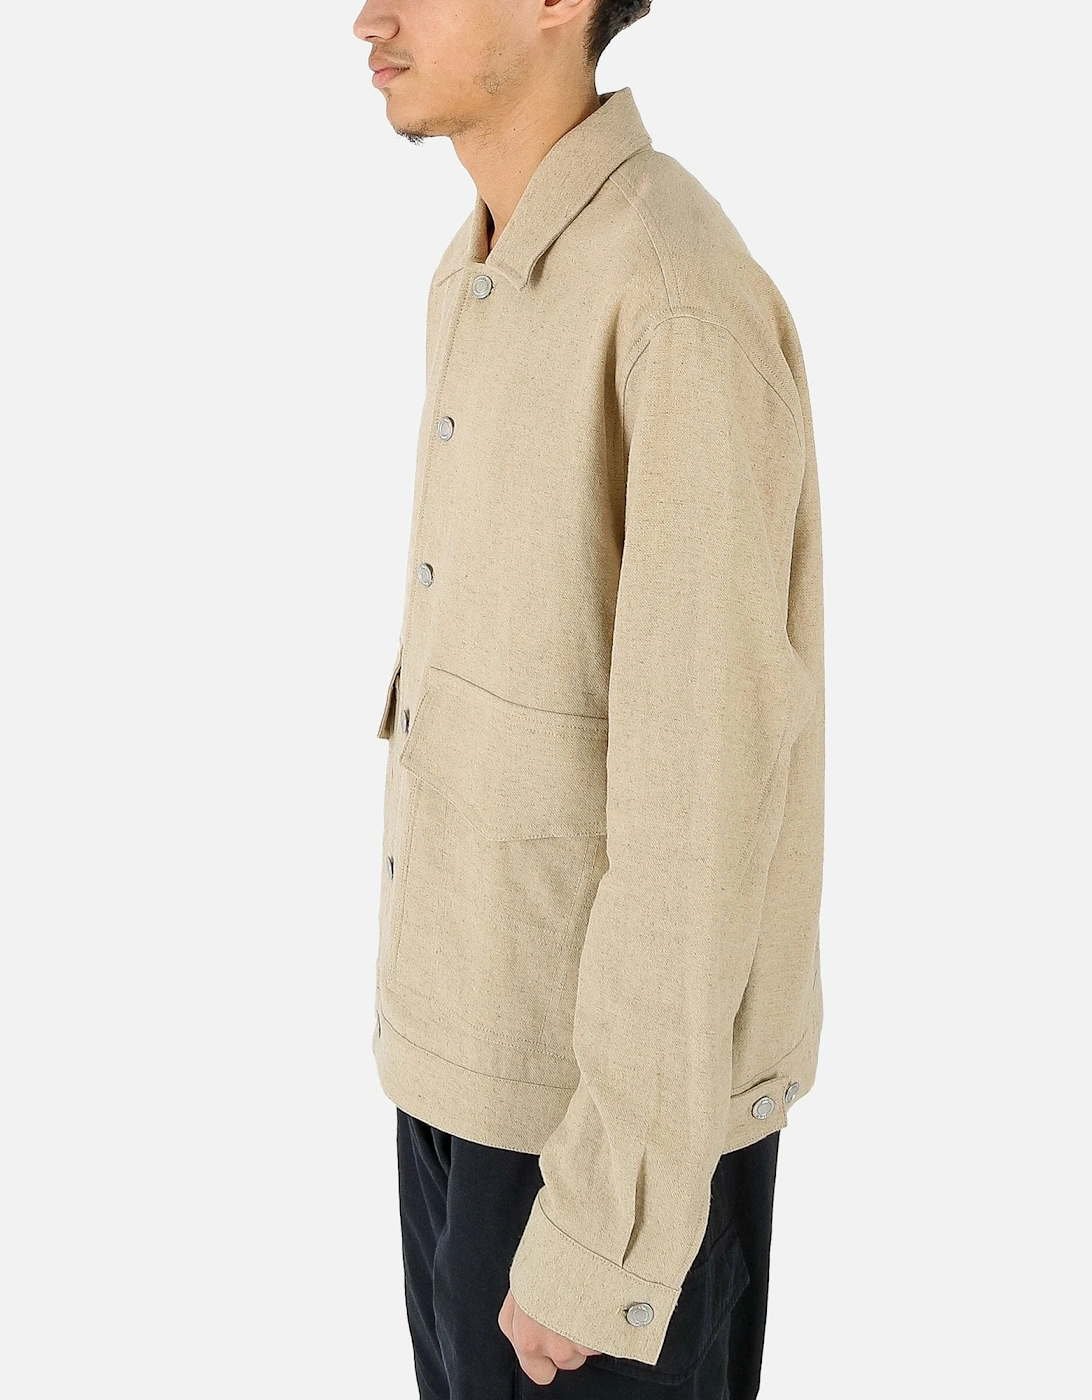 Mitford Linen Cotton Natural Jacket